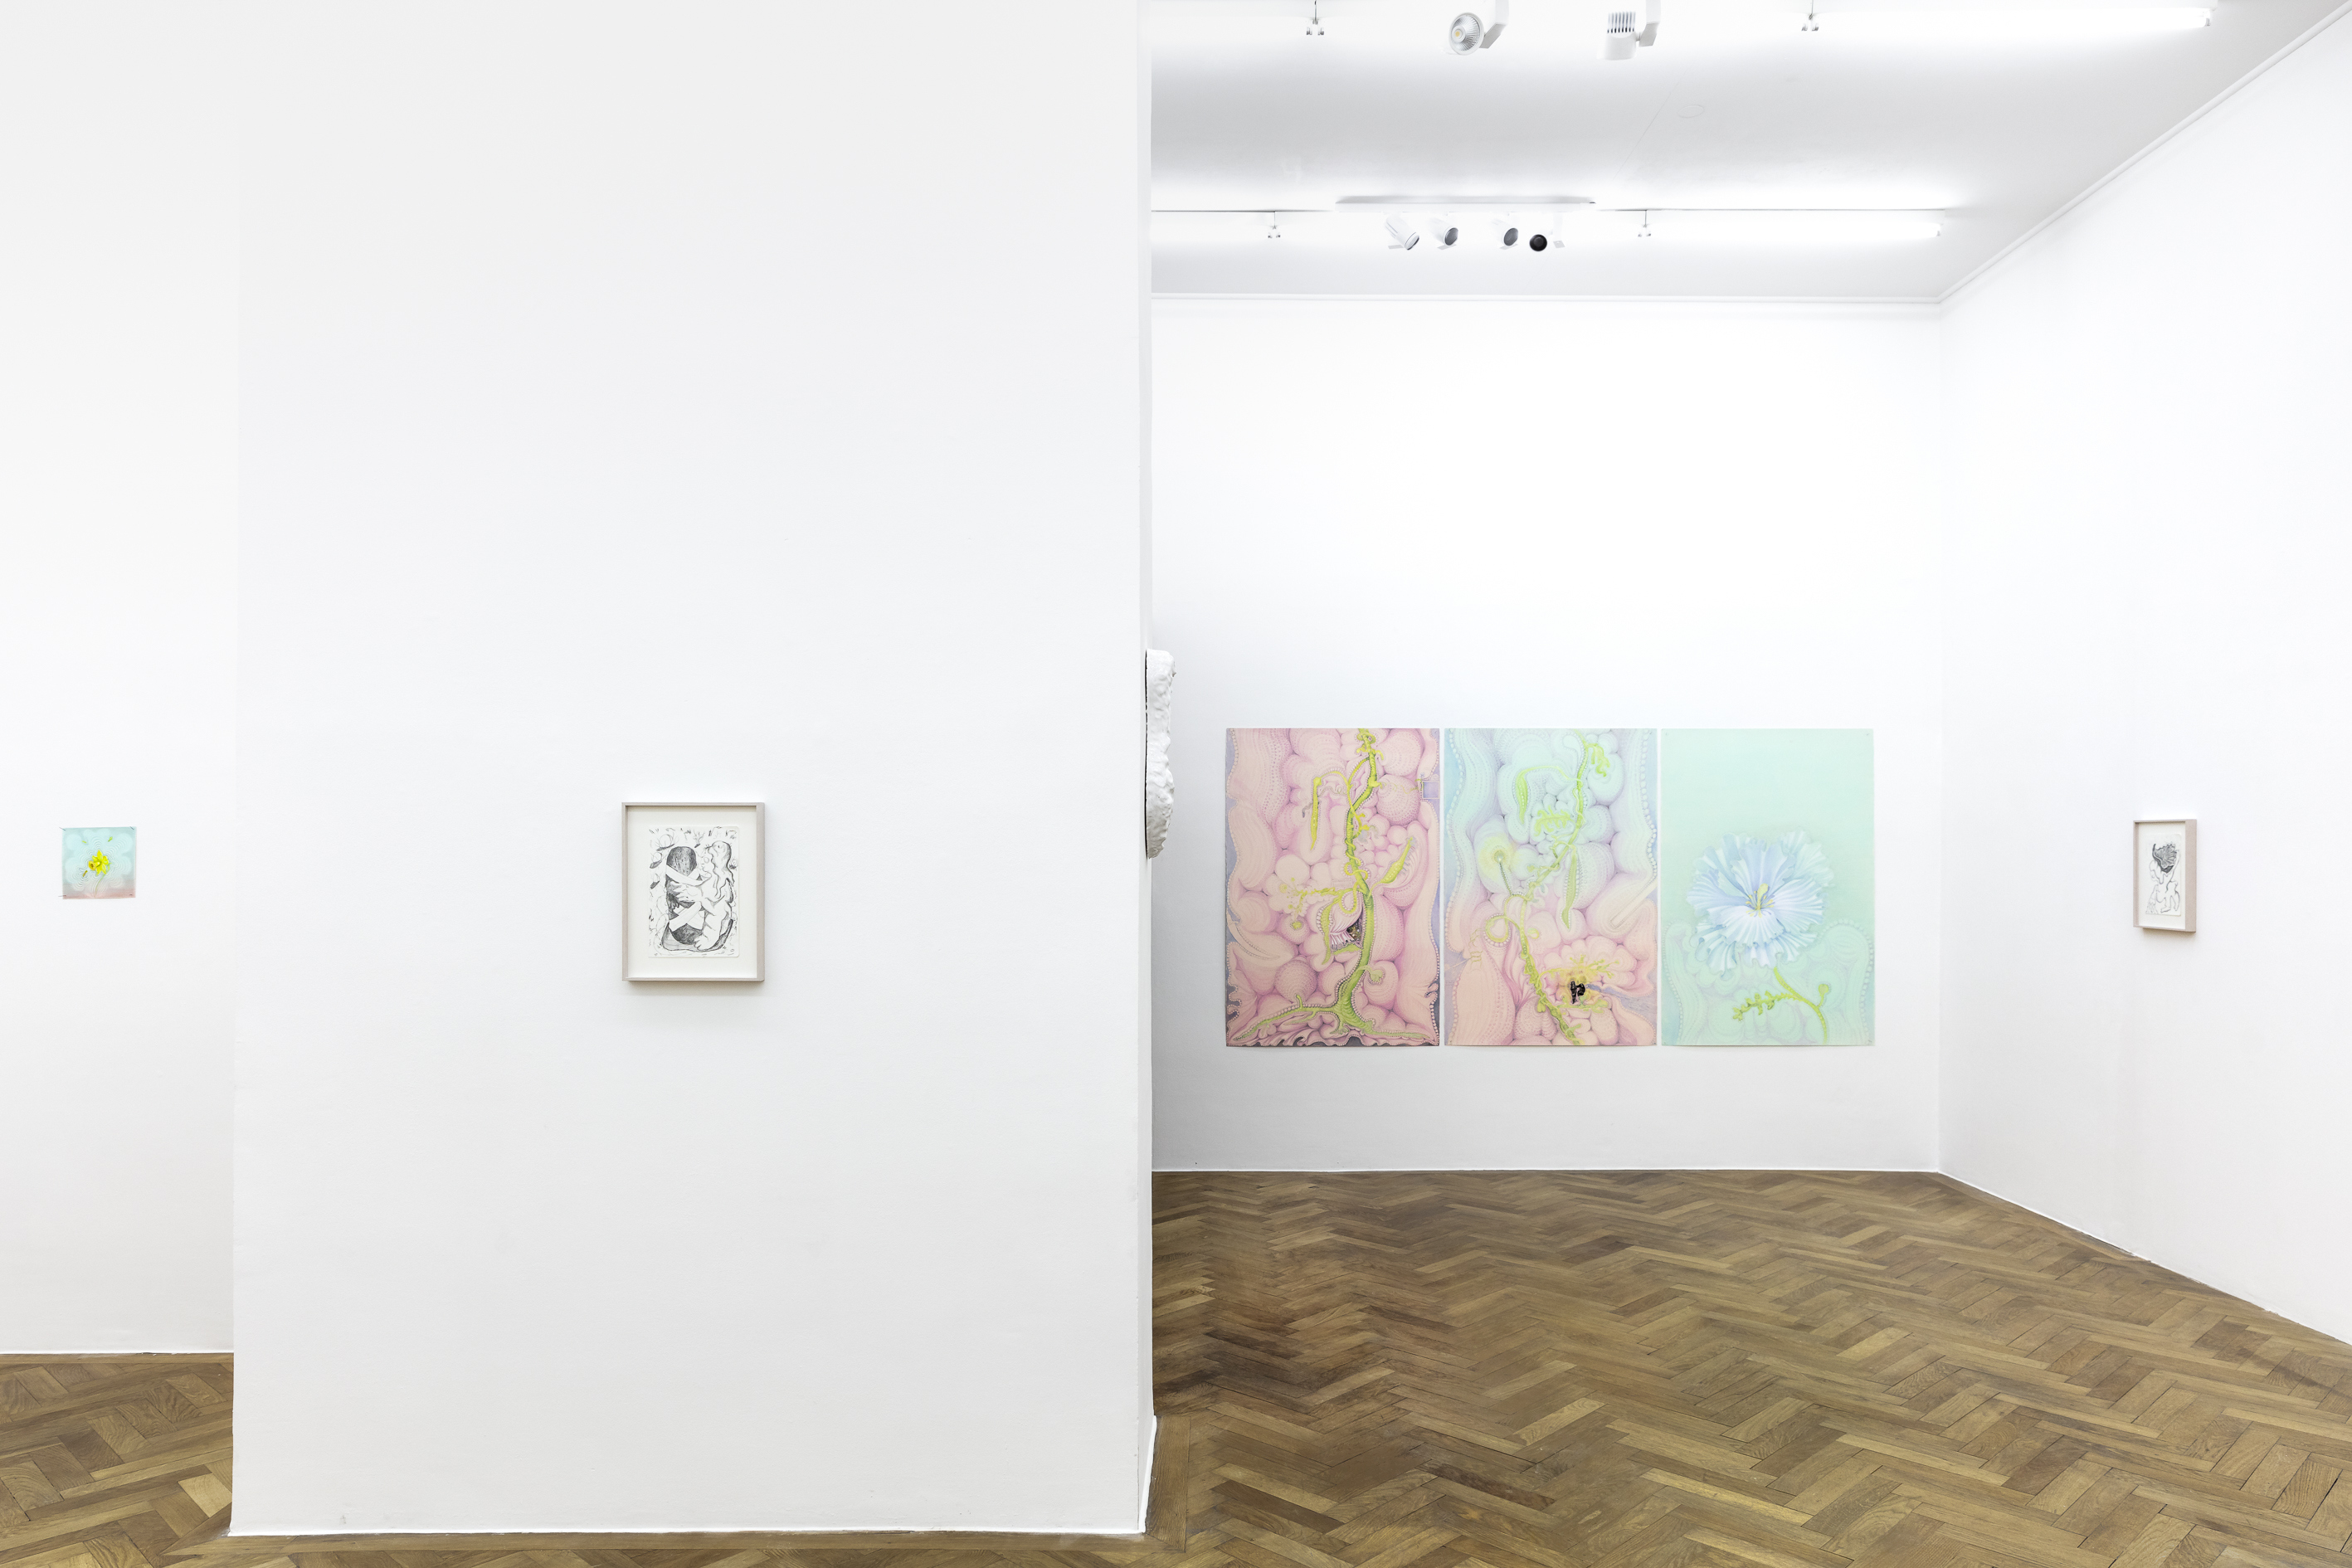 VARIOUS OTHERS 2023, Kinke Kooi, Anna McCarthy, Monique Mouton, installation view at Sperling, Munich